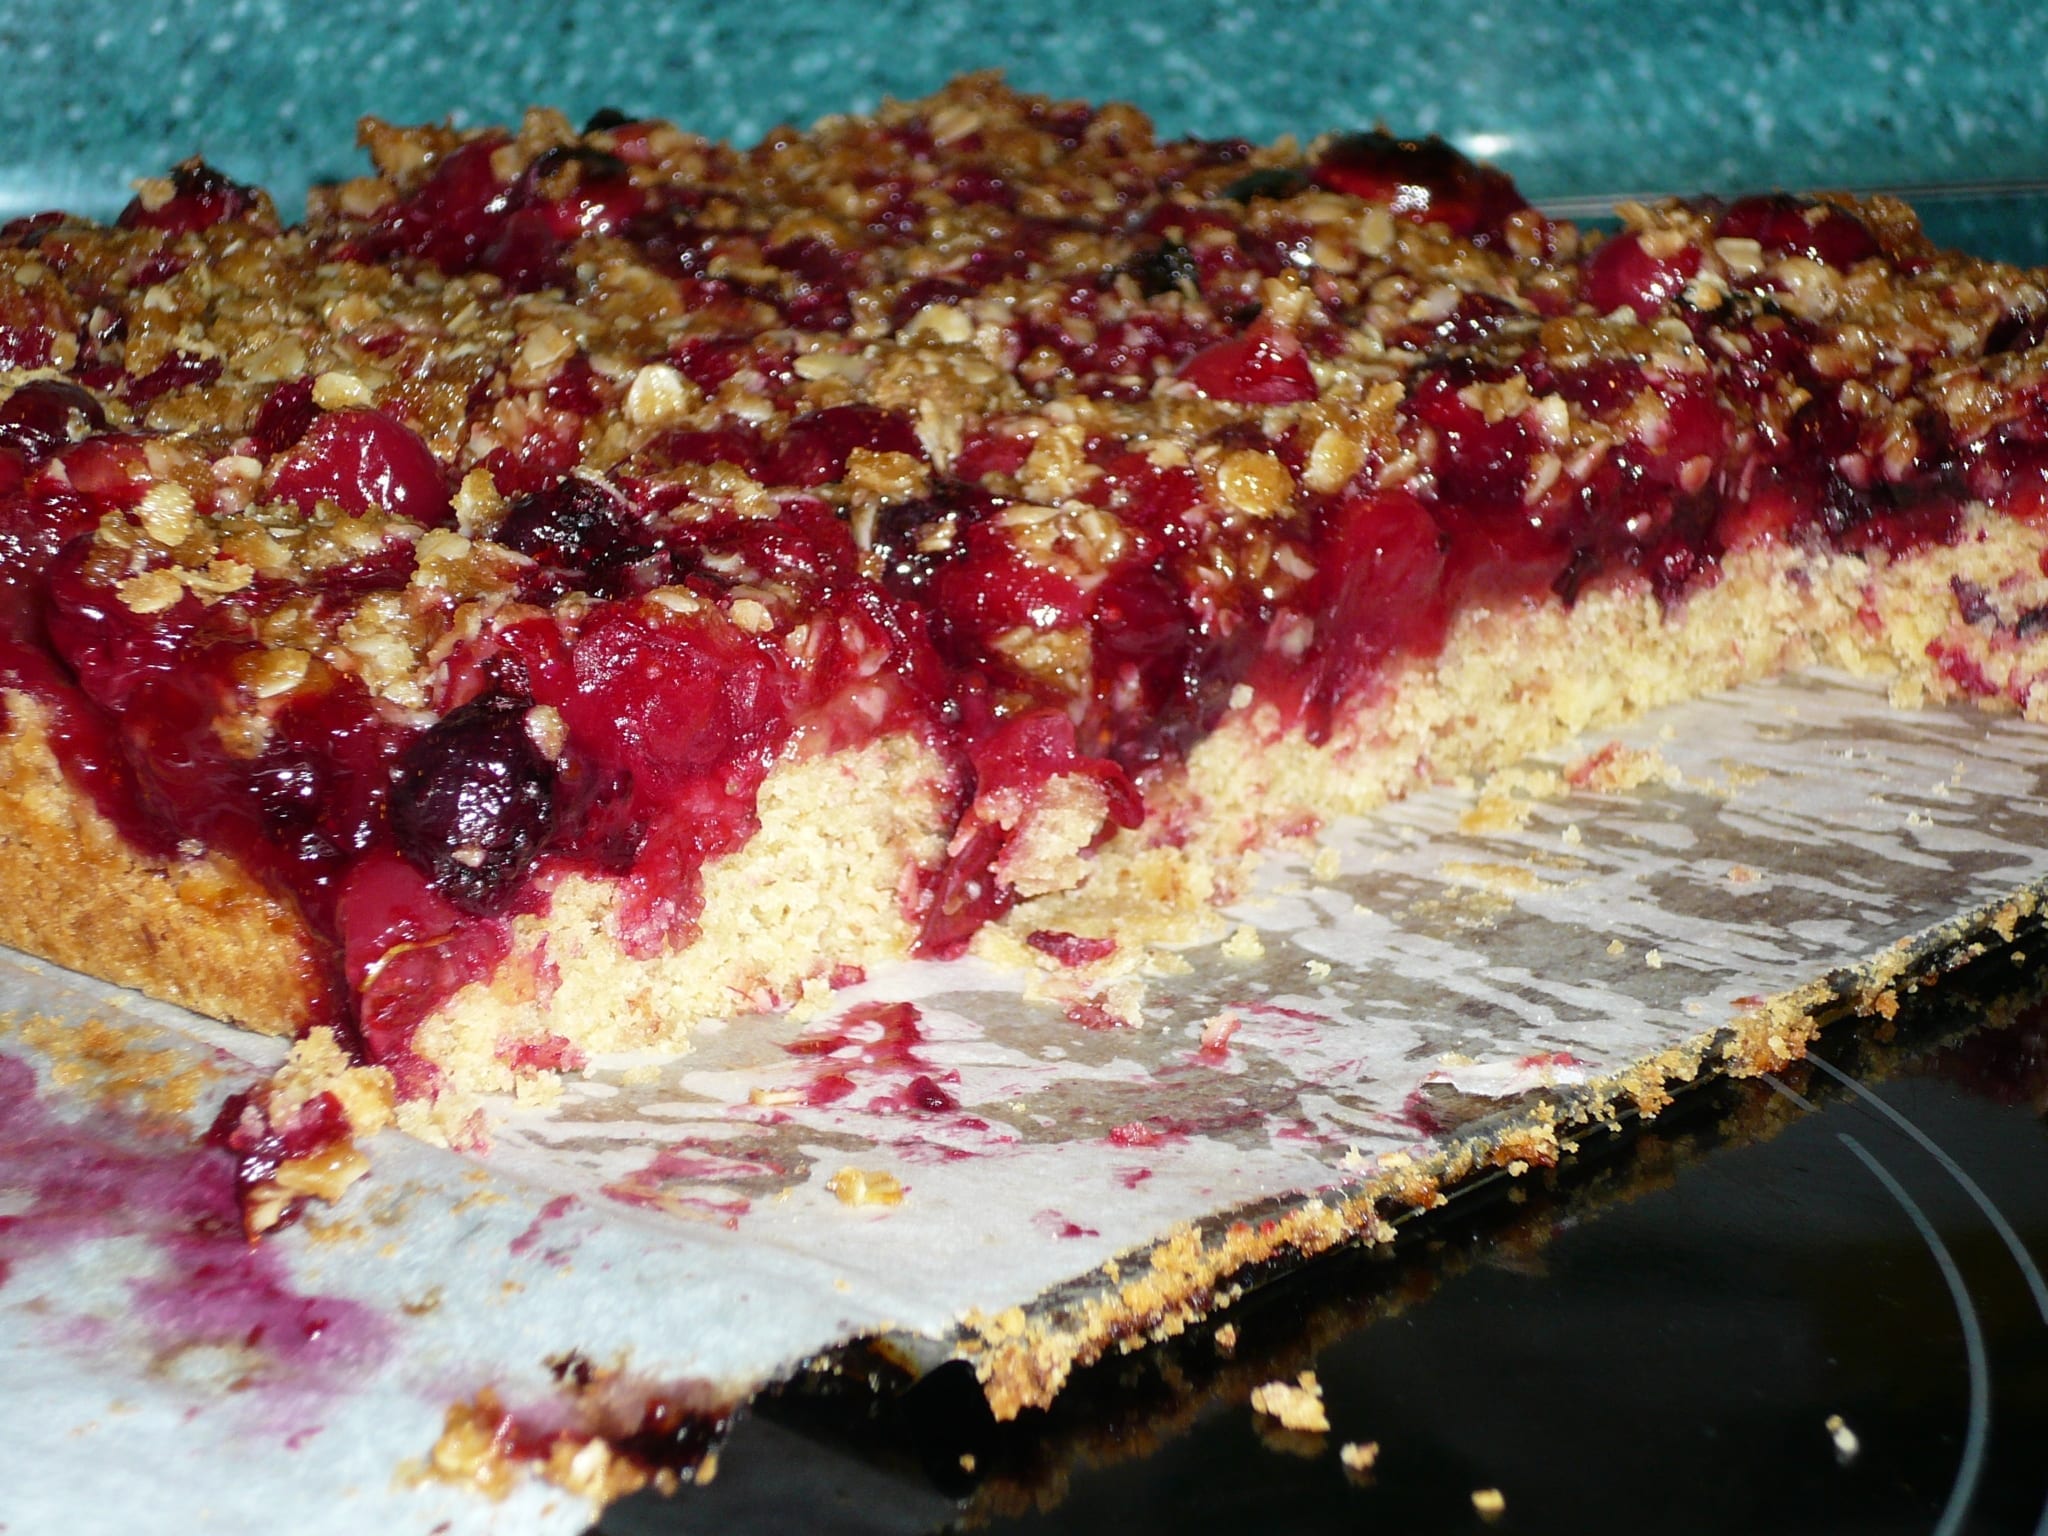 Cranberry streusel cake